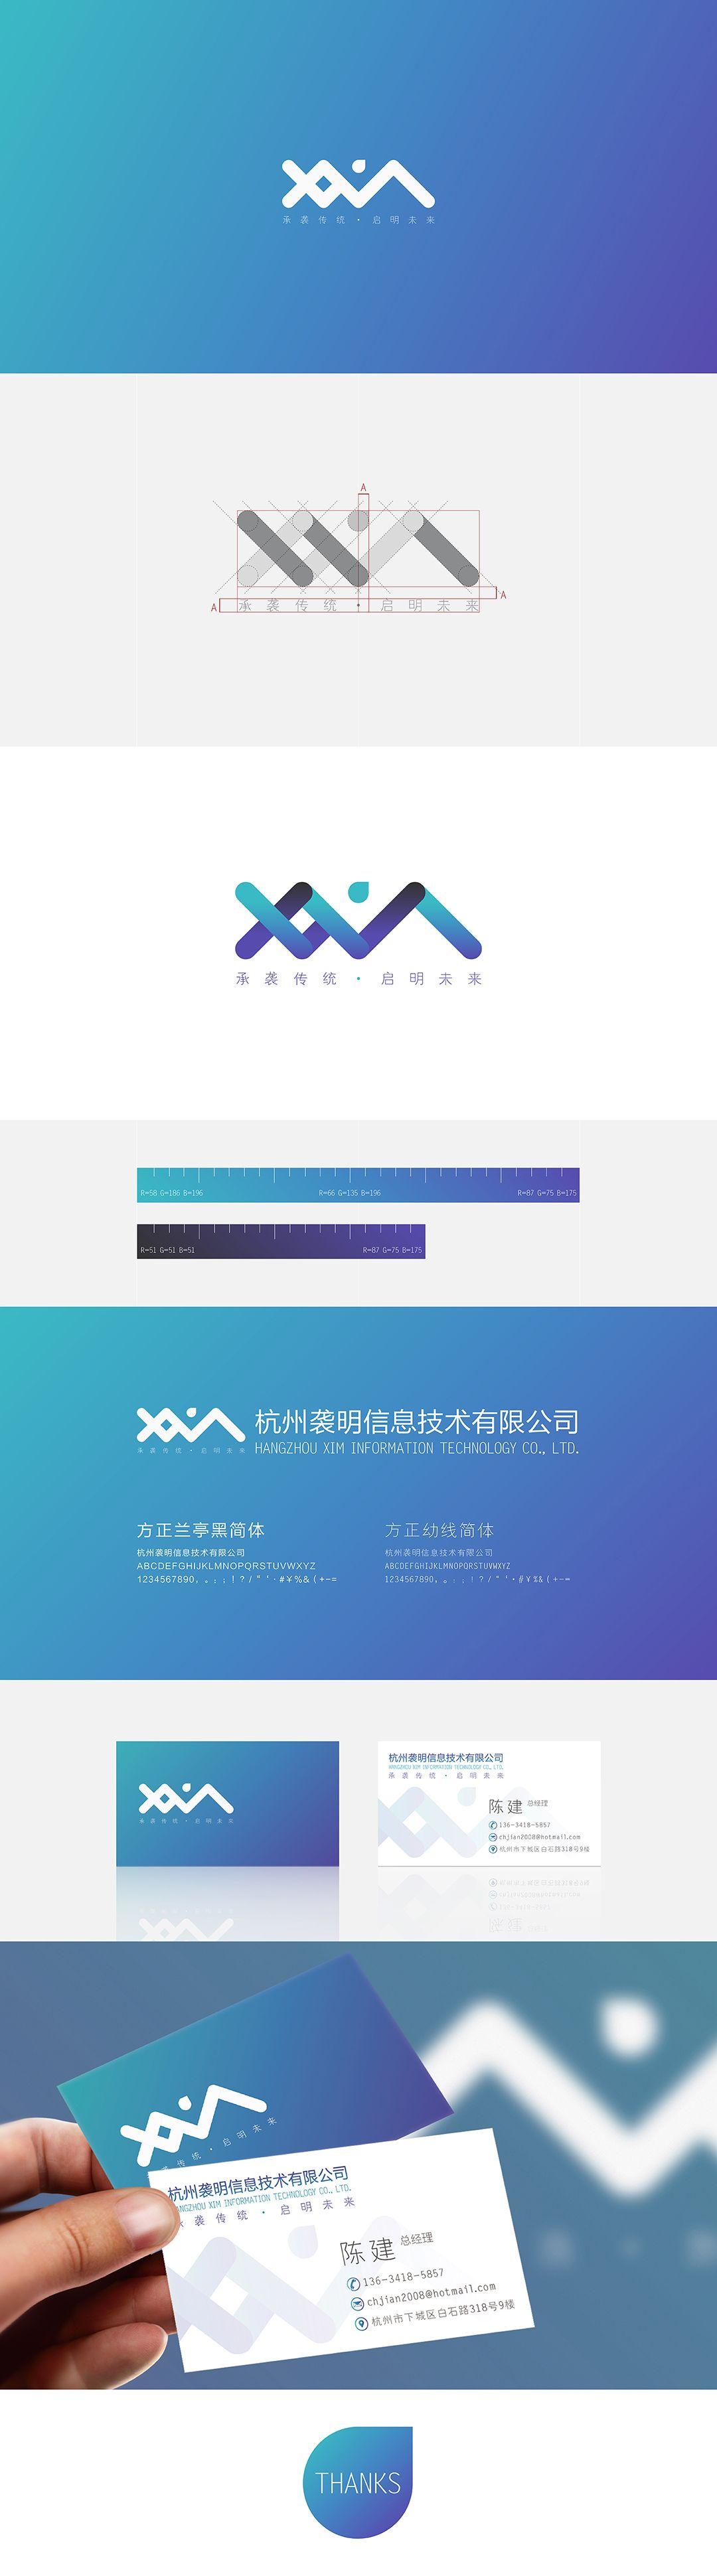 Xim Logo - XIM LOGO on Behance